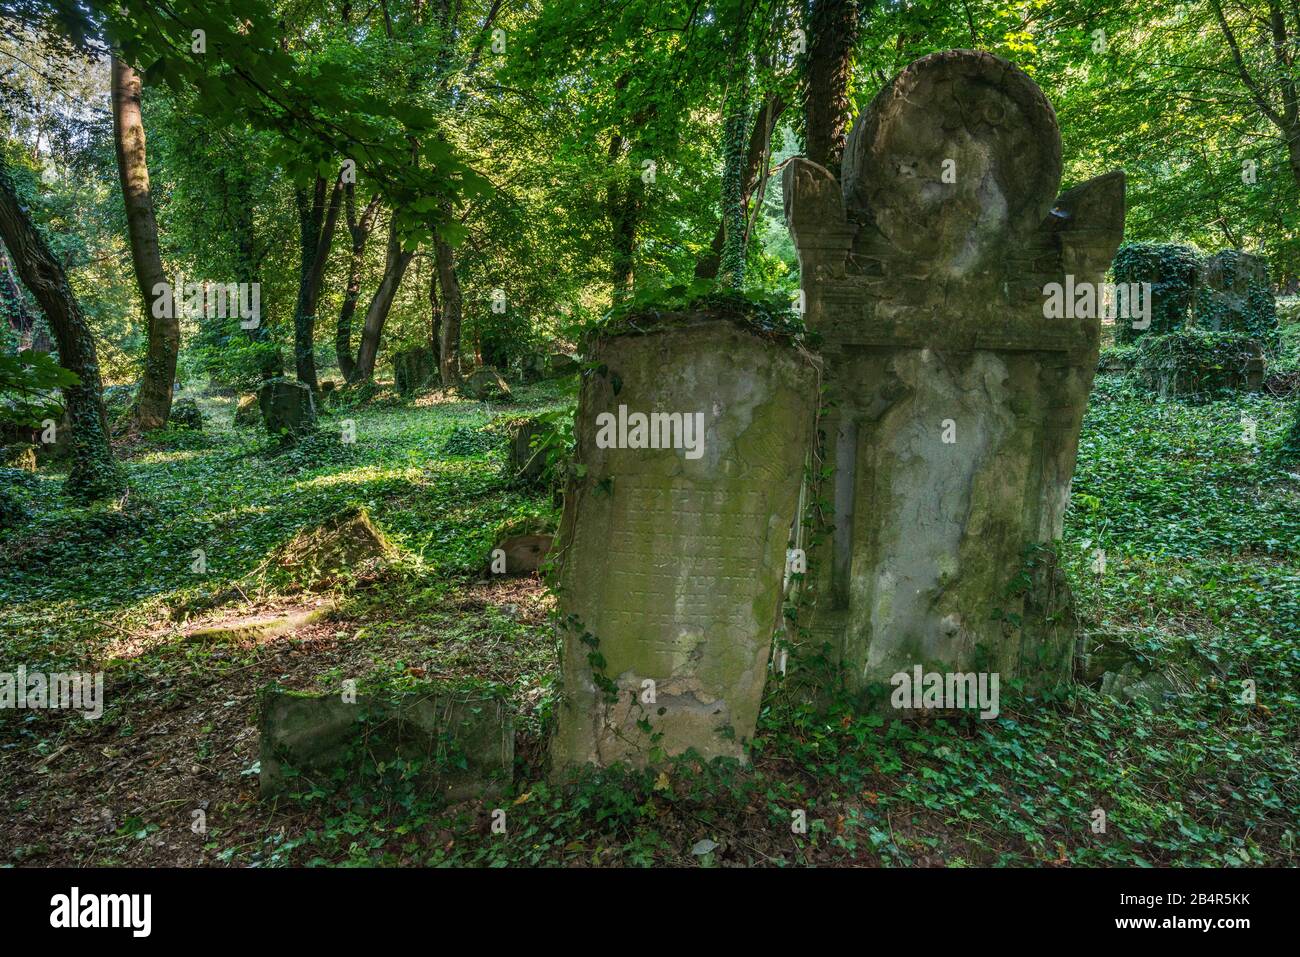 Gravestones at New Jewish Cemetery in Przemysl, Malopolska, Poland Stock Photo